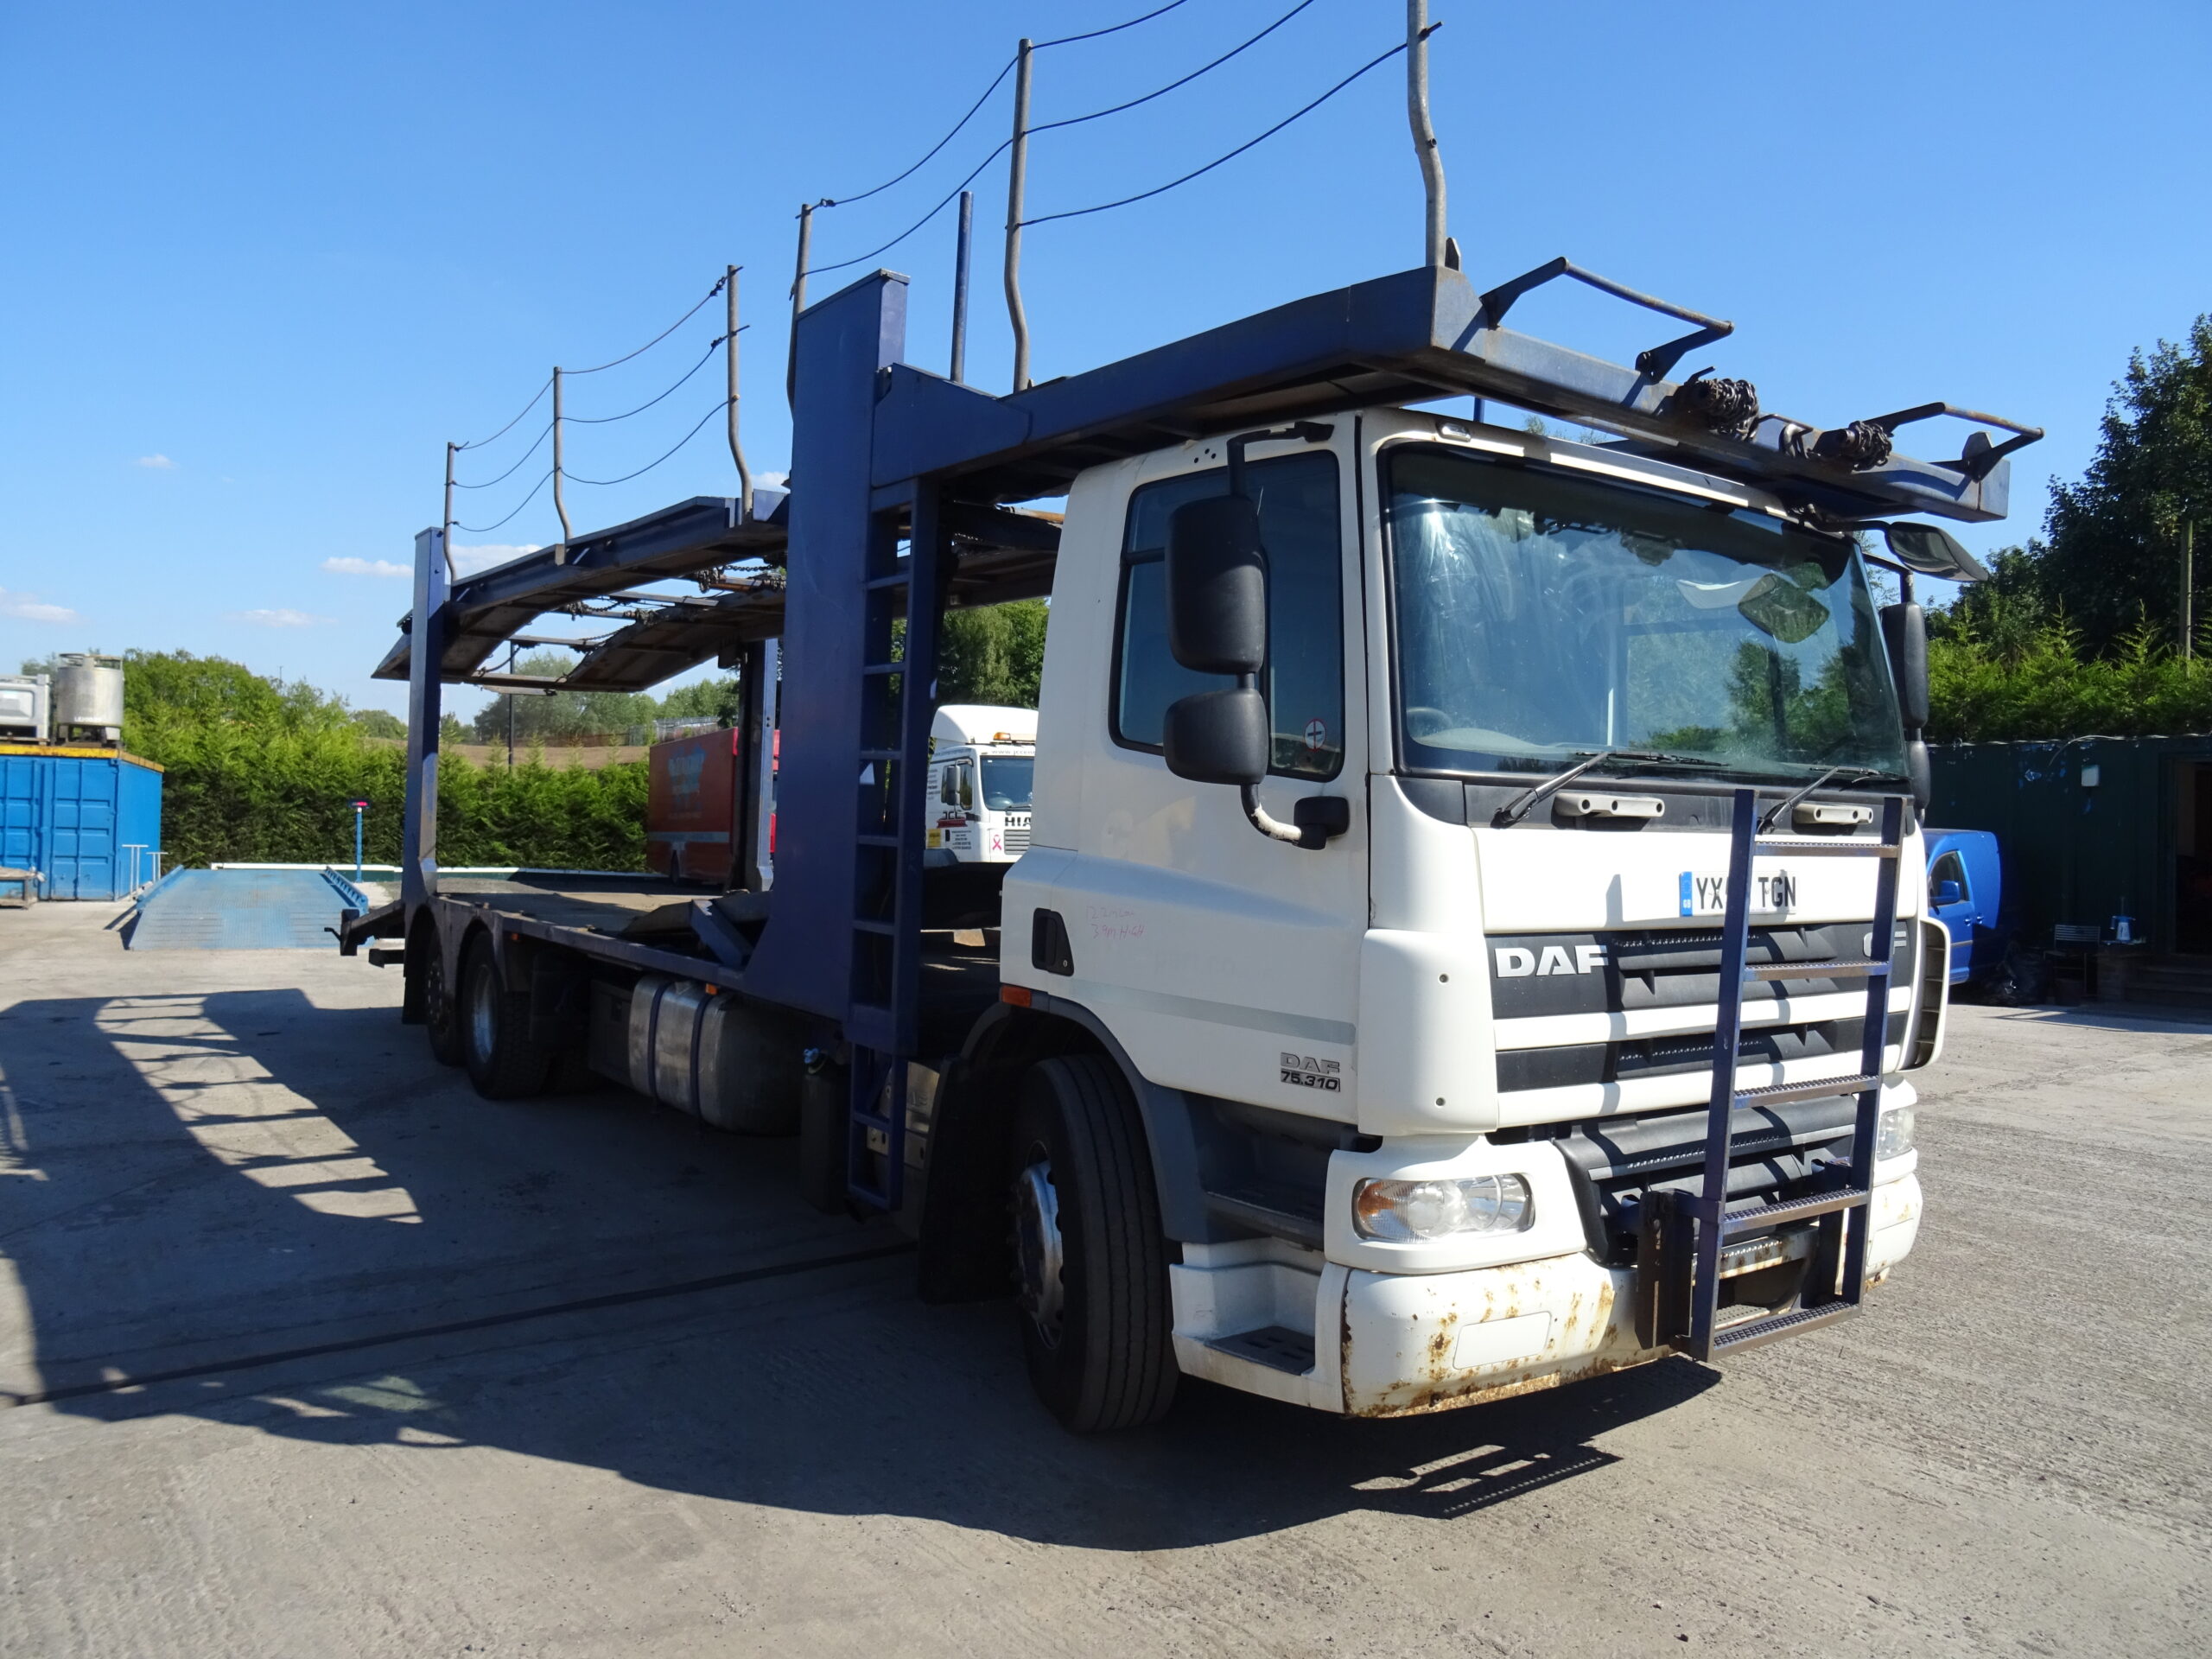 Used Flatbed Trucks for Sale UK